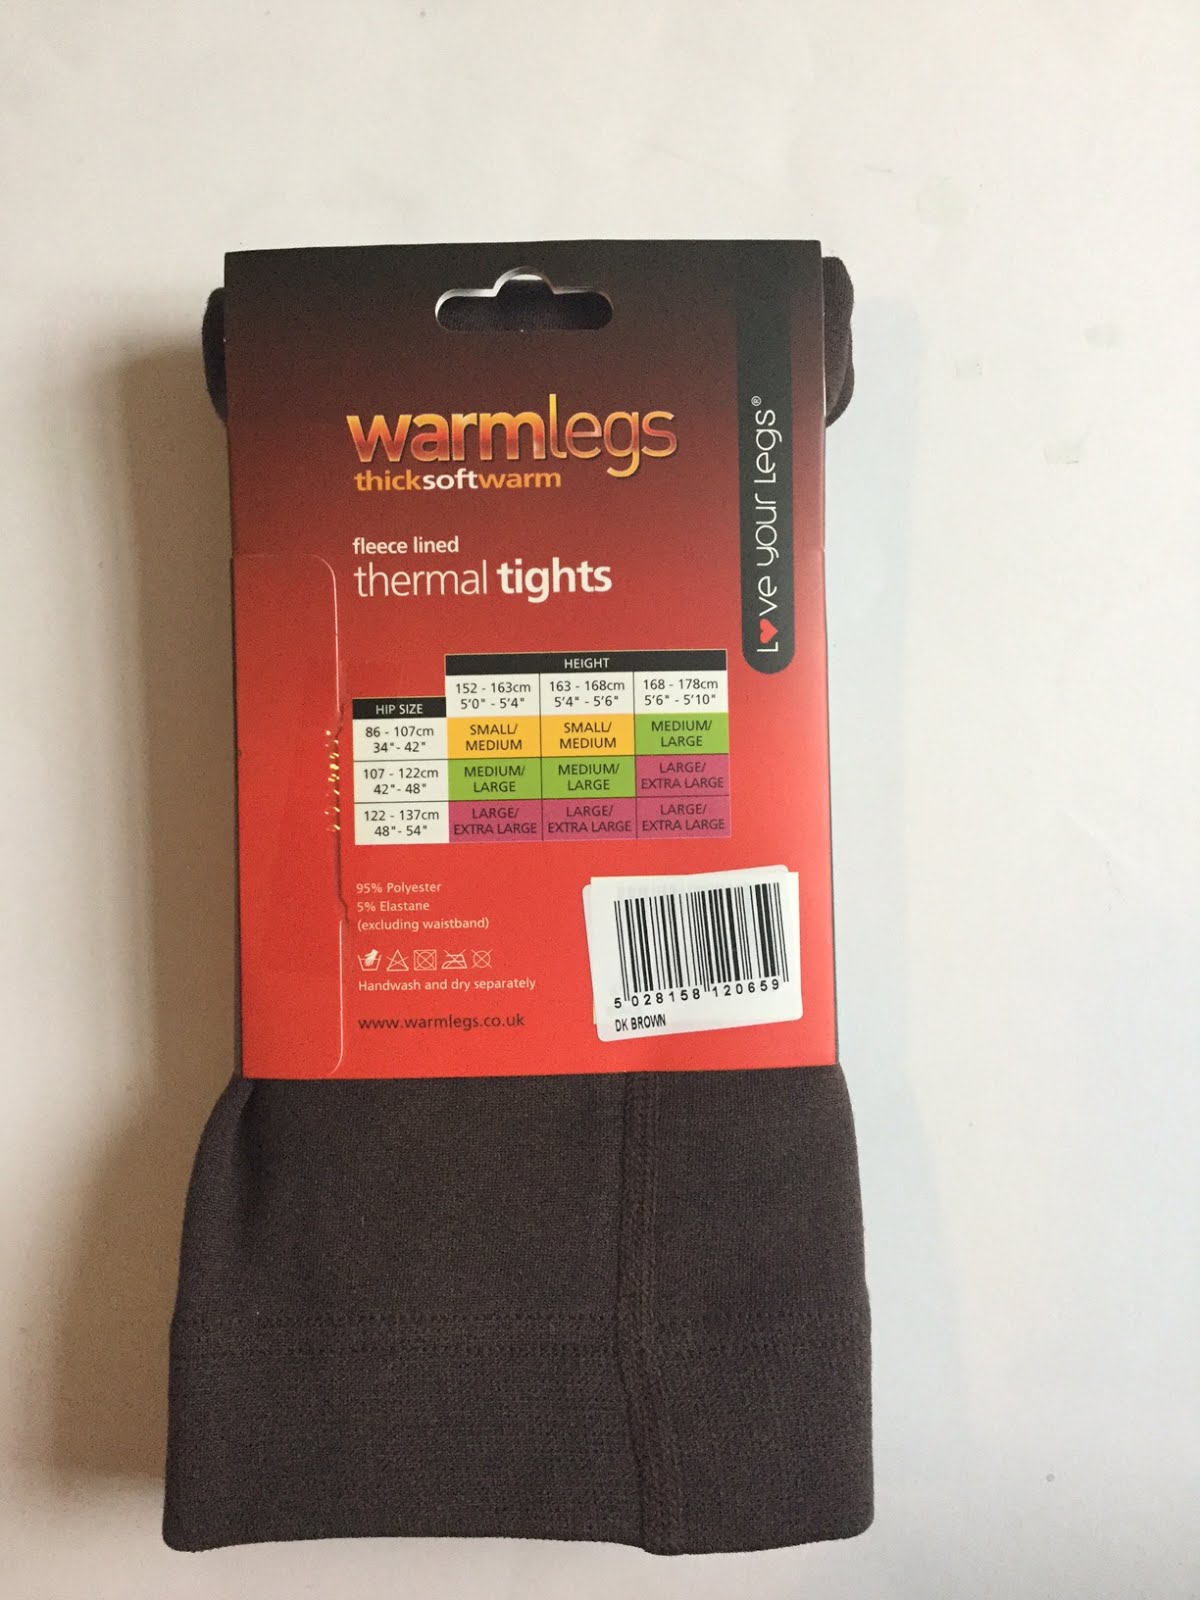 Hosiery For Men: Reviewed: warmlegs 300 denier fleece-lined thermal tights